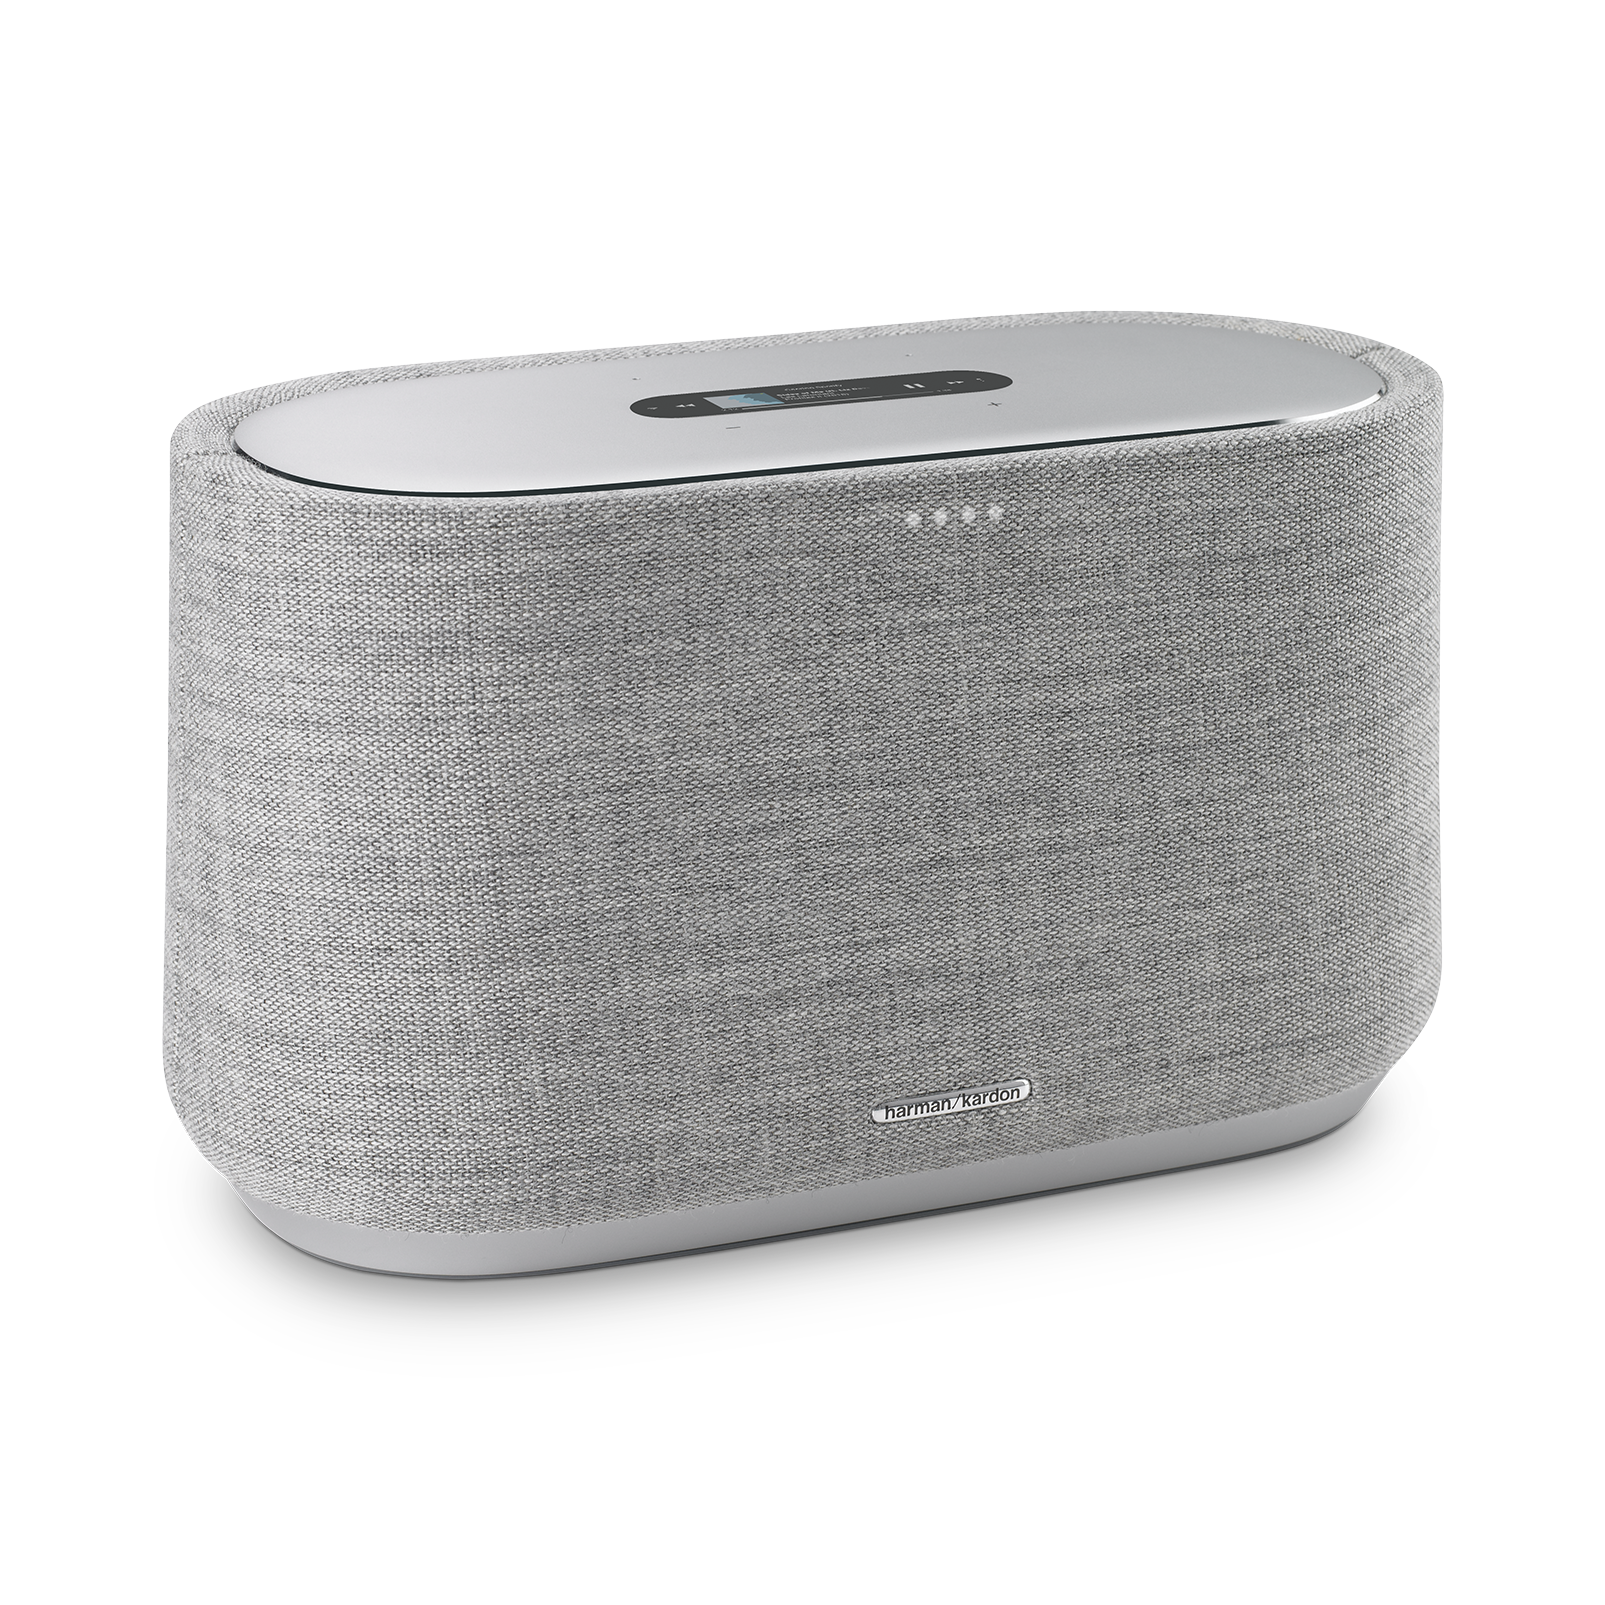 Harman Kardon Citation 300 - Grey - The medium-size smart home speaker with award winning design - Hero